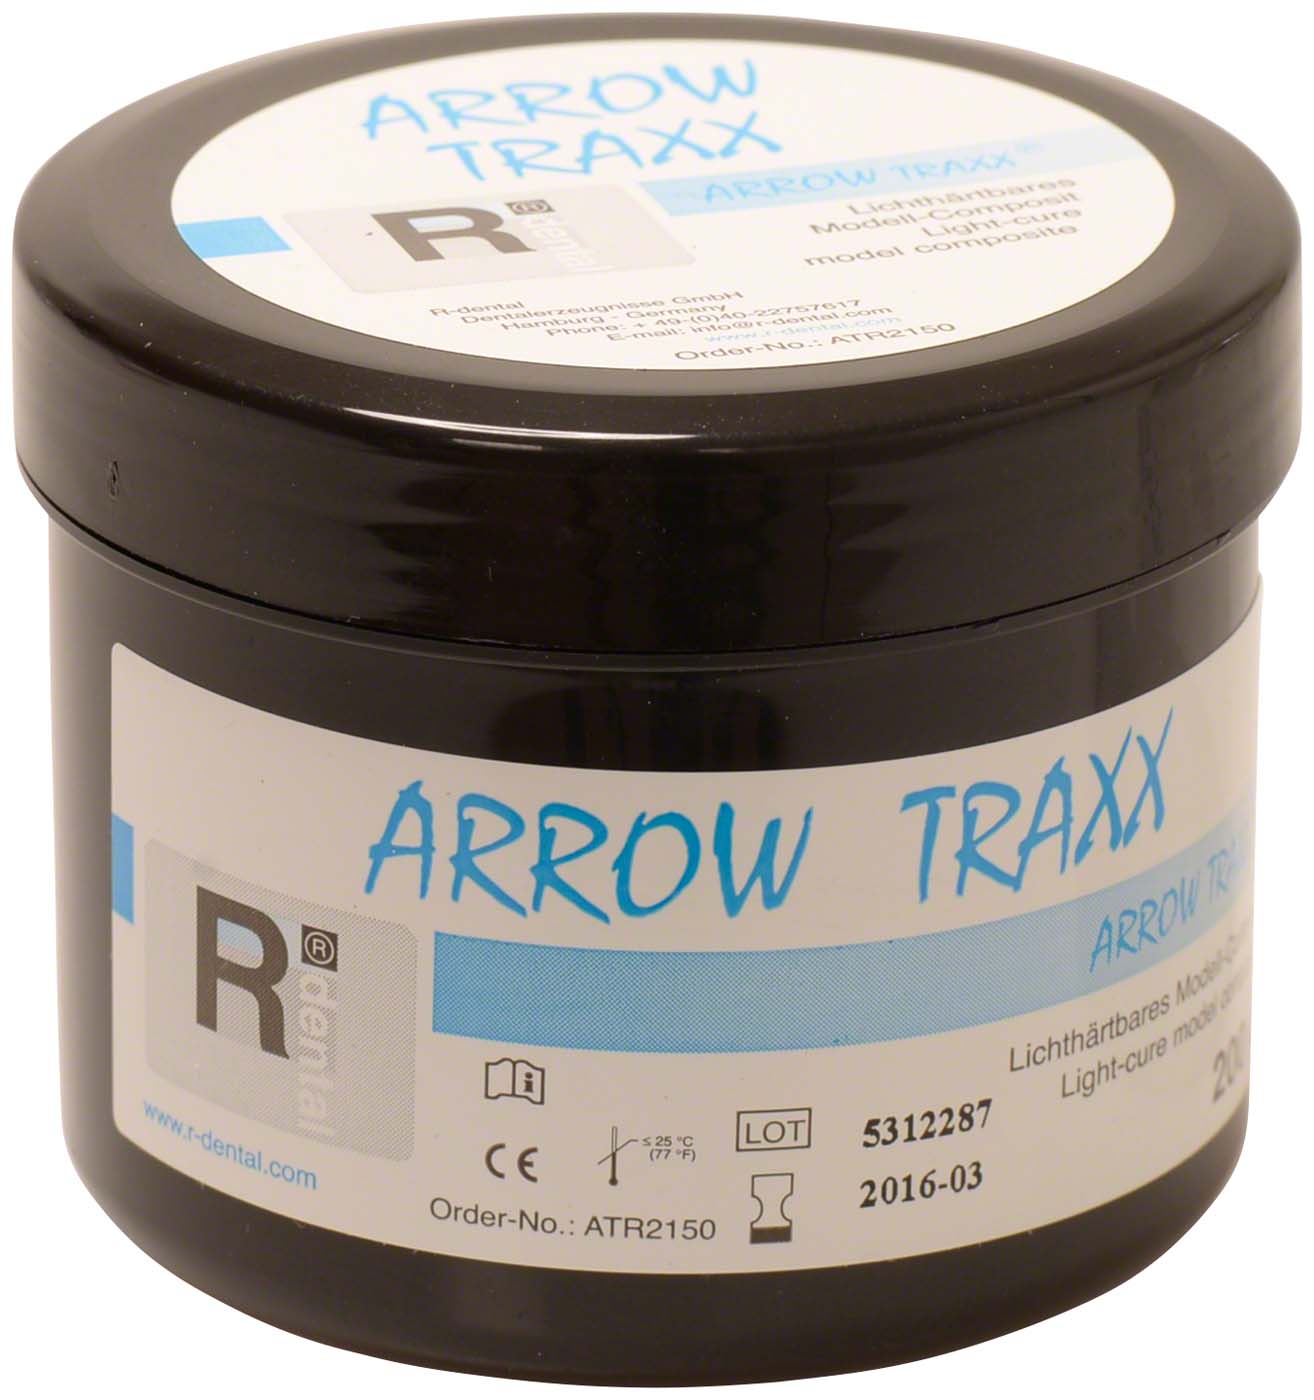 ARROW TRAXX® R-Dental